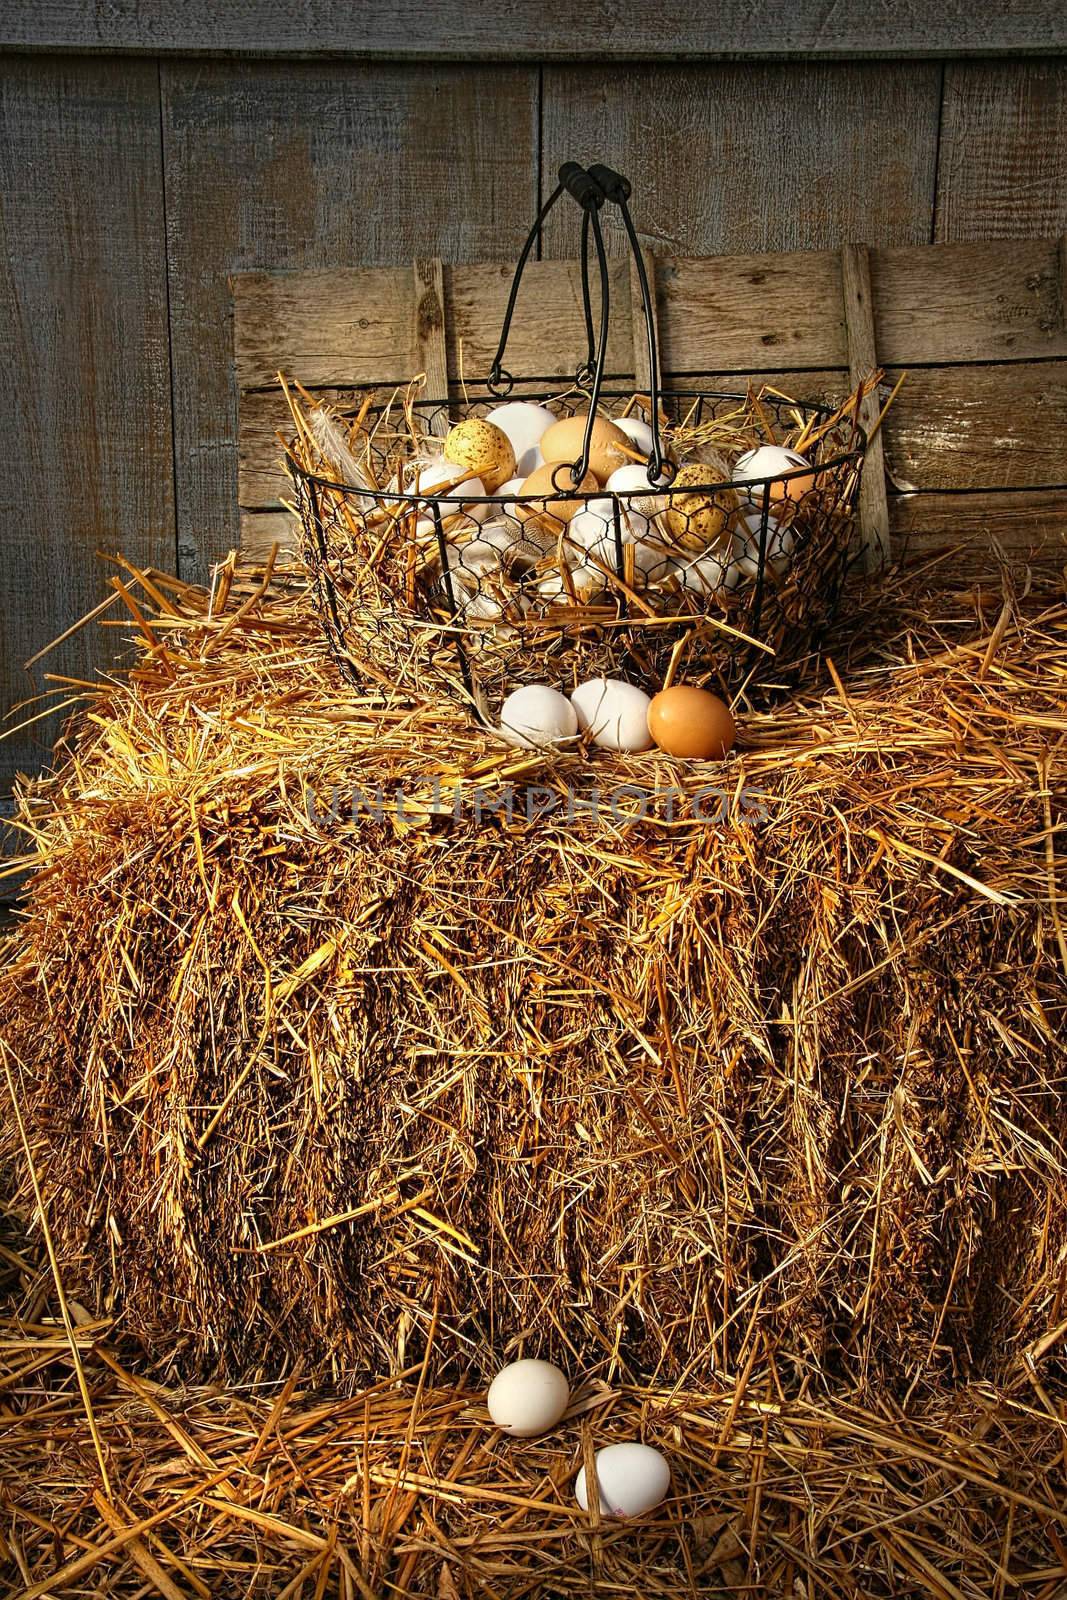 Basket of freshly laid  eggs lying on straw by Sandralise